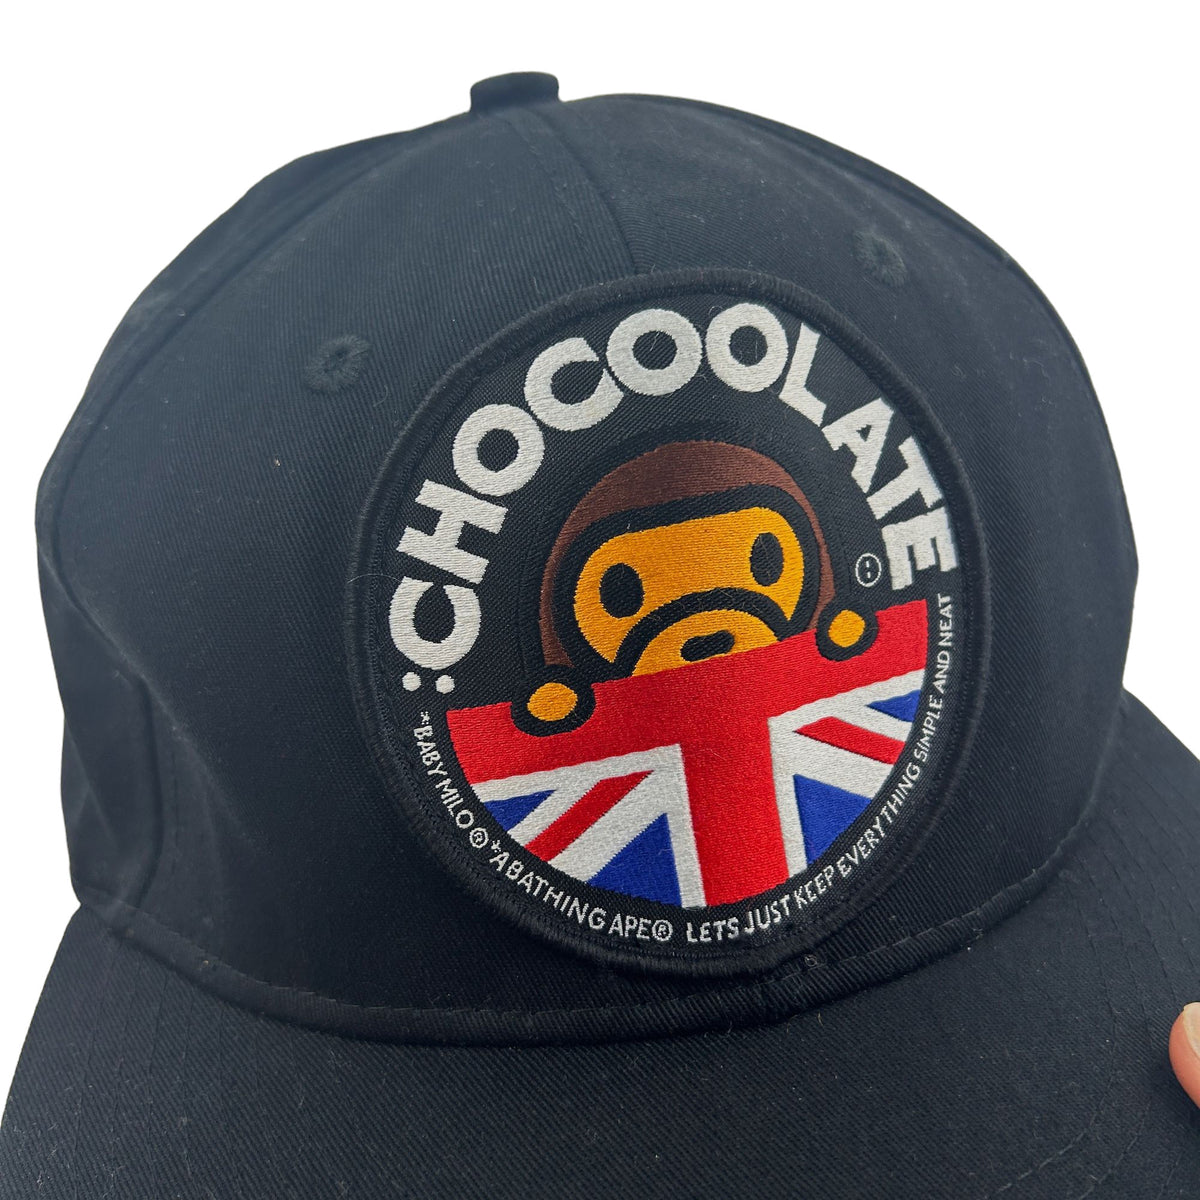 Bape x Chocoolate Hat